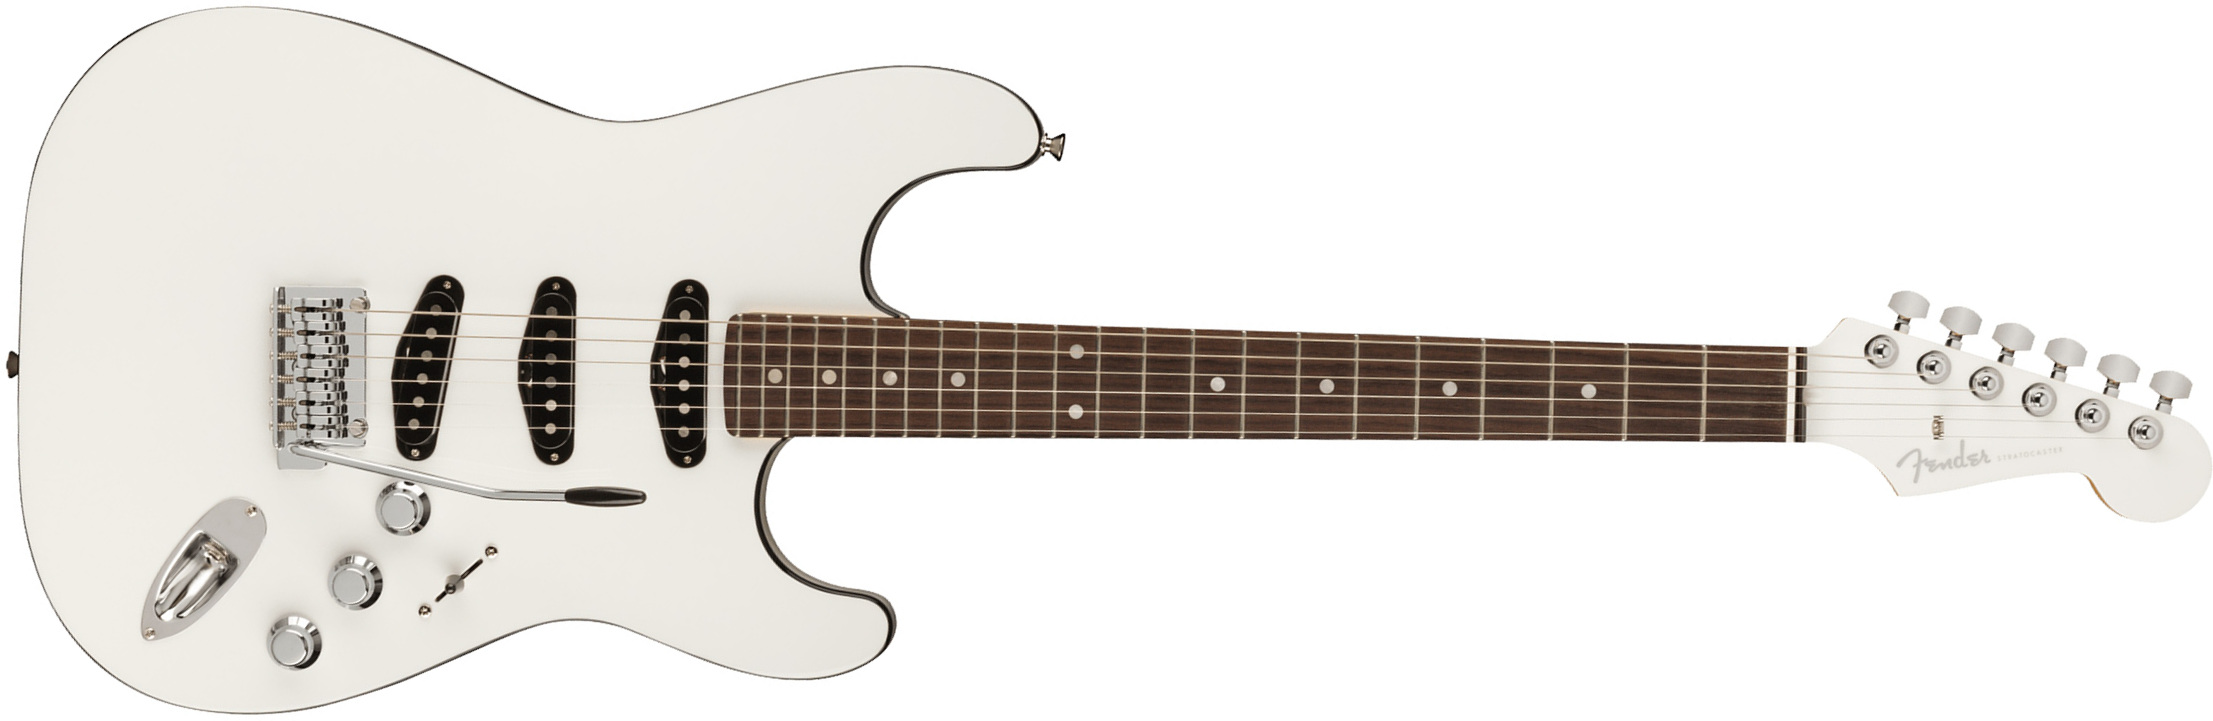 Fender Strat Aerodyne Special Jap 3s Trem Rw - Bright White - E-Gitarre in Str-Form - Main picture